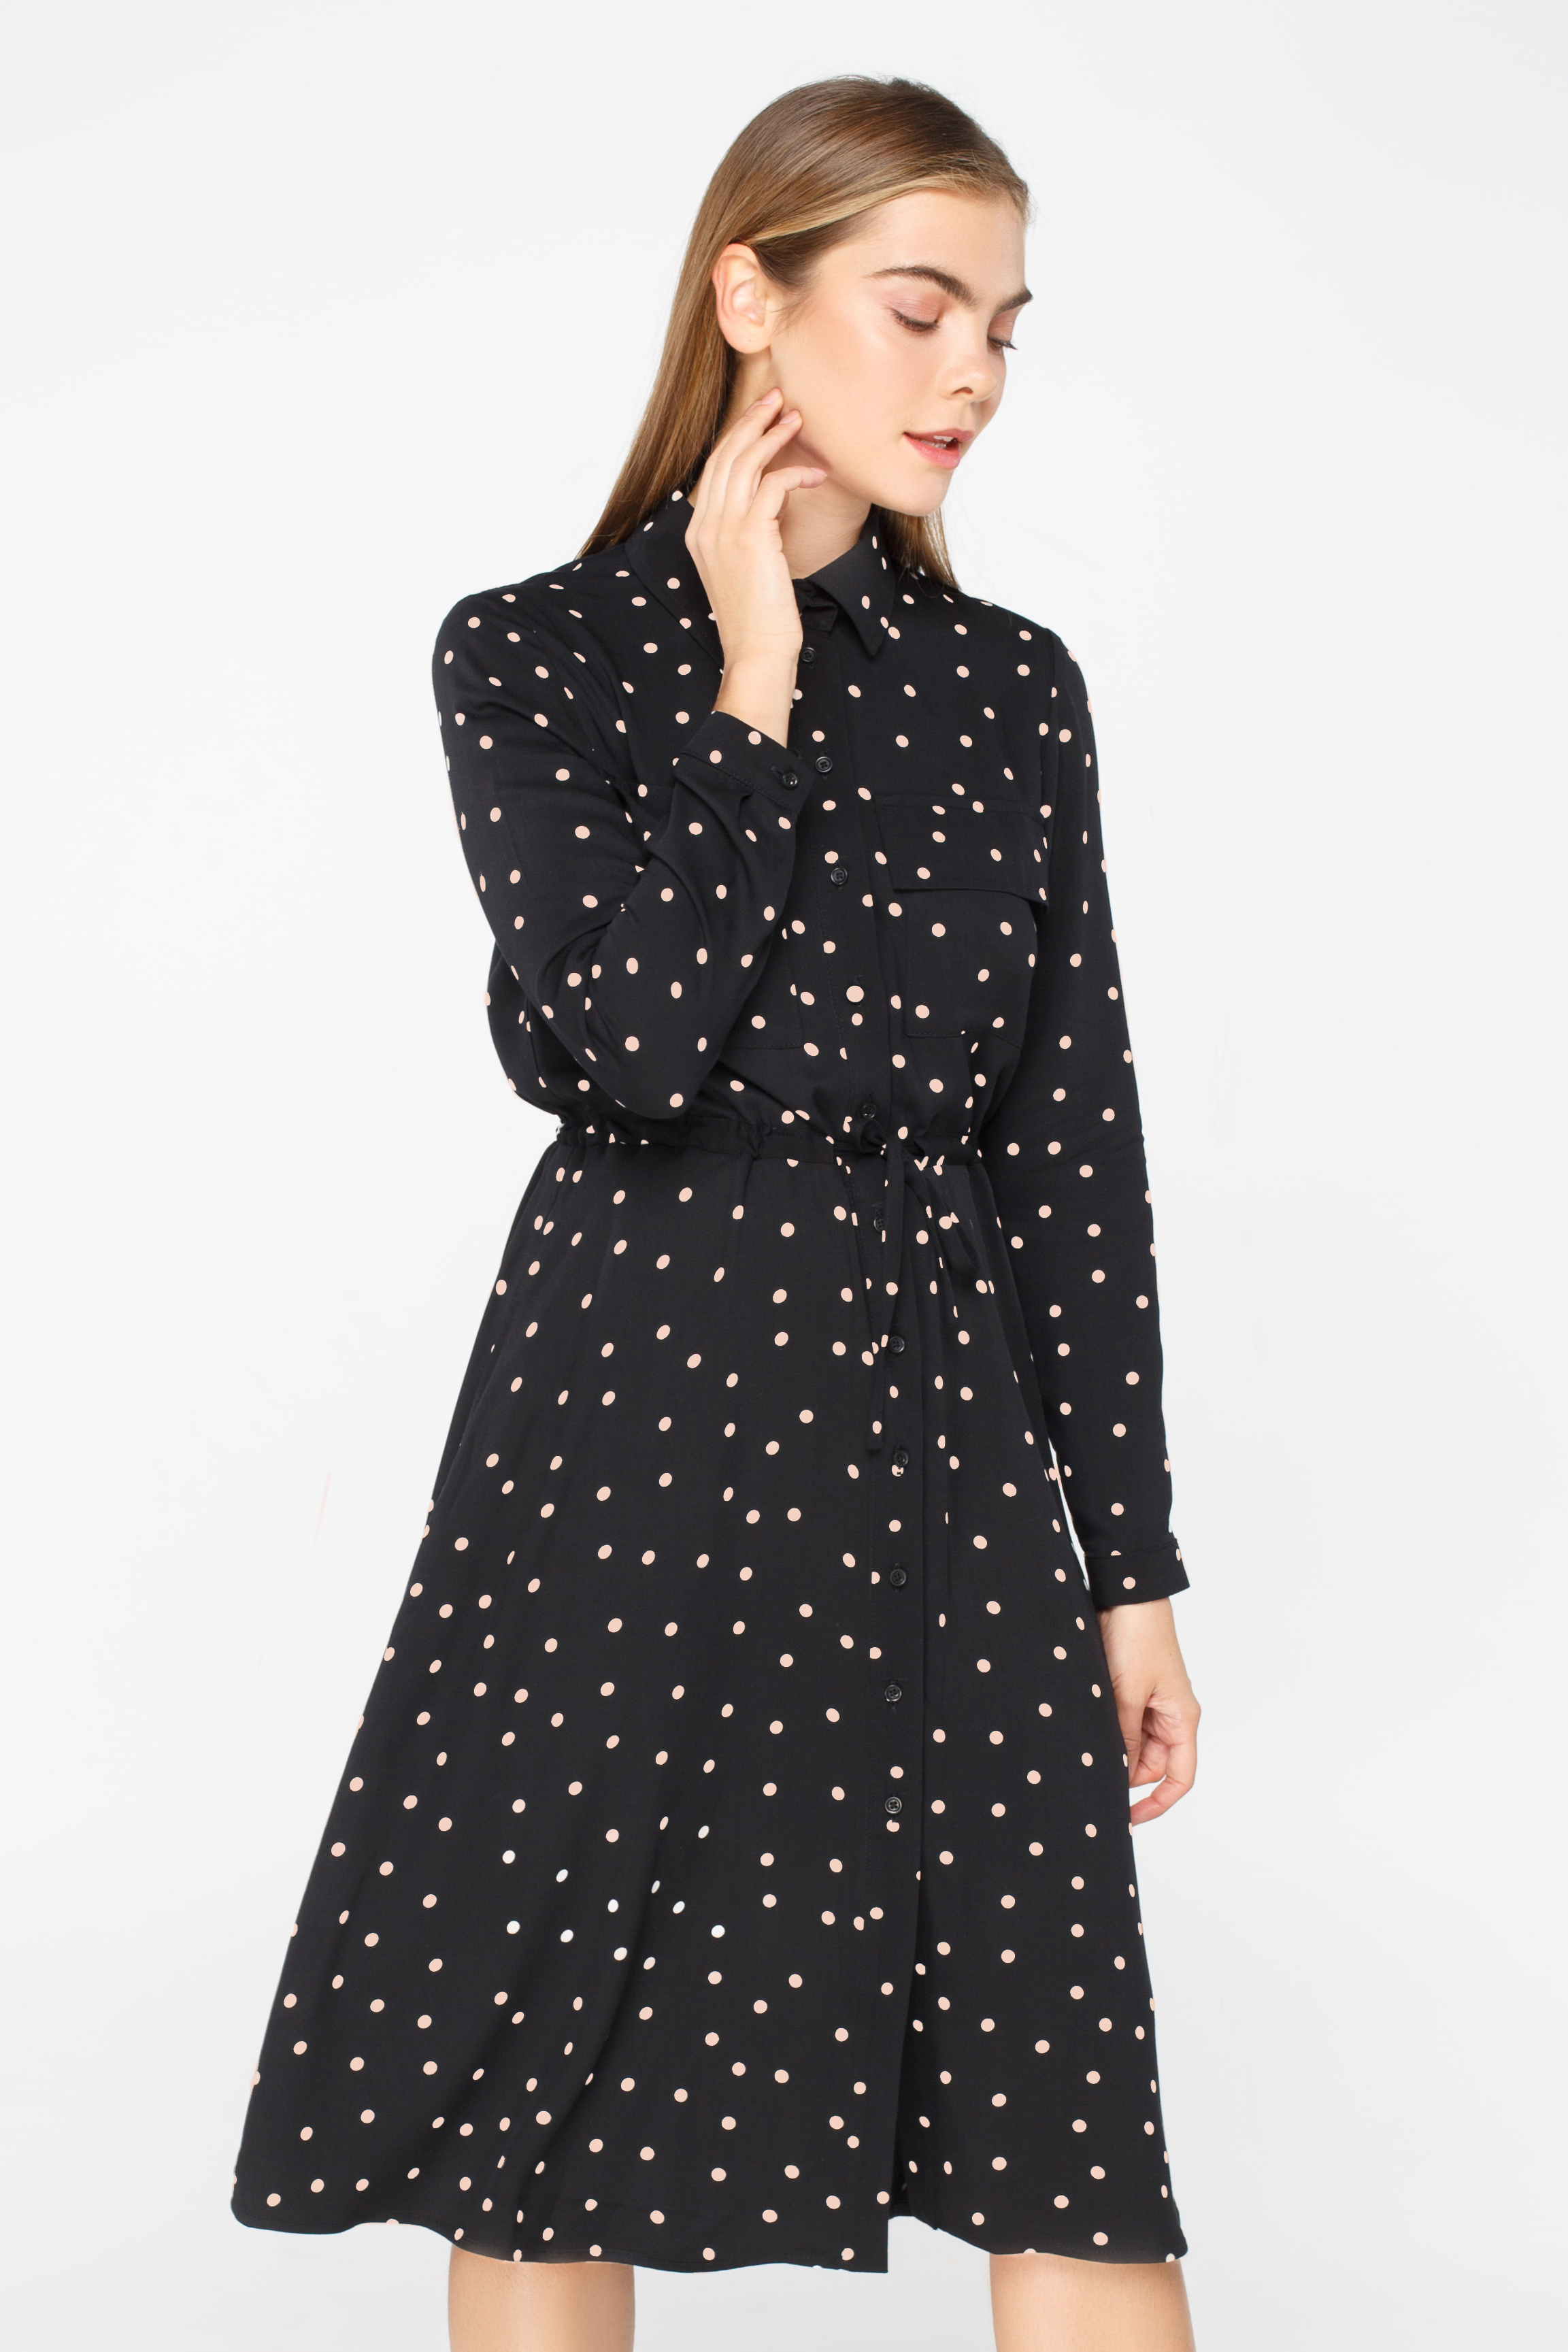 Black polka dot shirt dress below the knee, photo 1